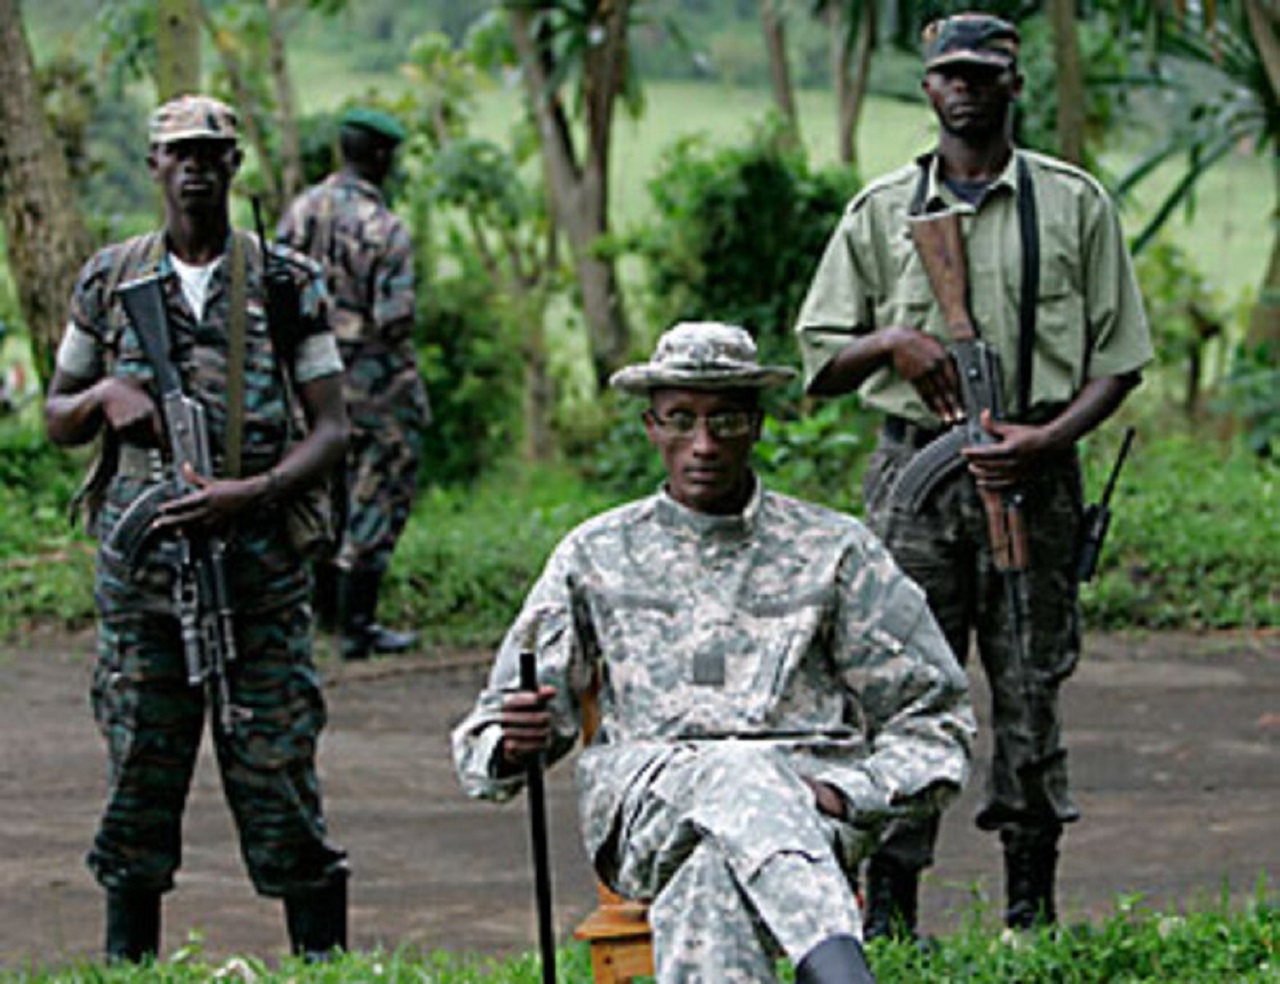 Rwanda arrests Congo rebel leader Nkunda (image by CSMonitor.com).